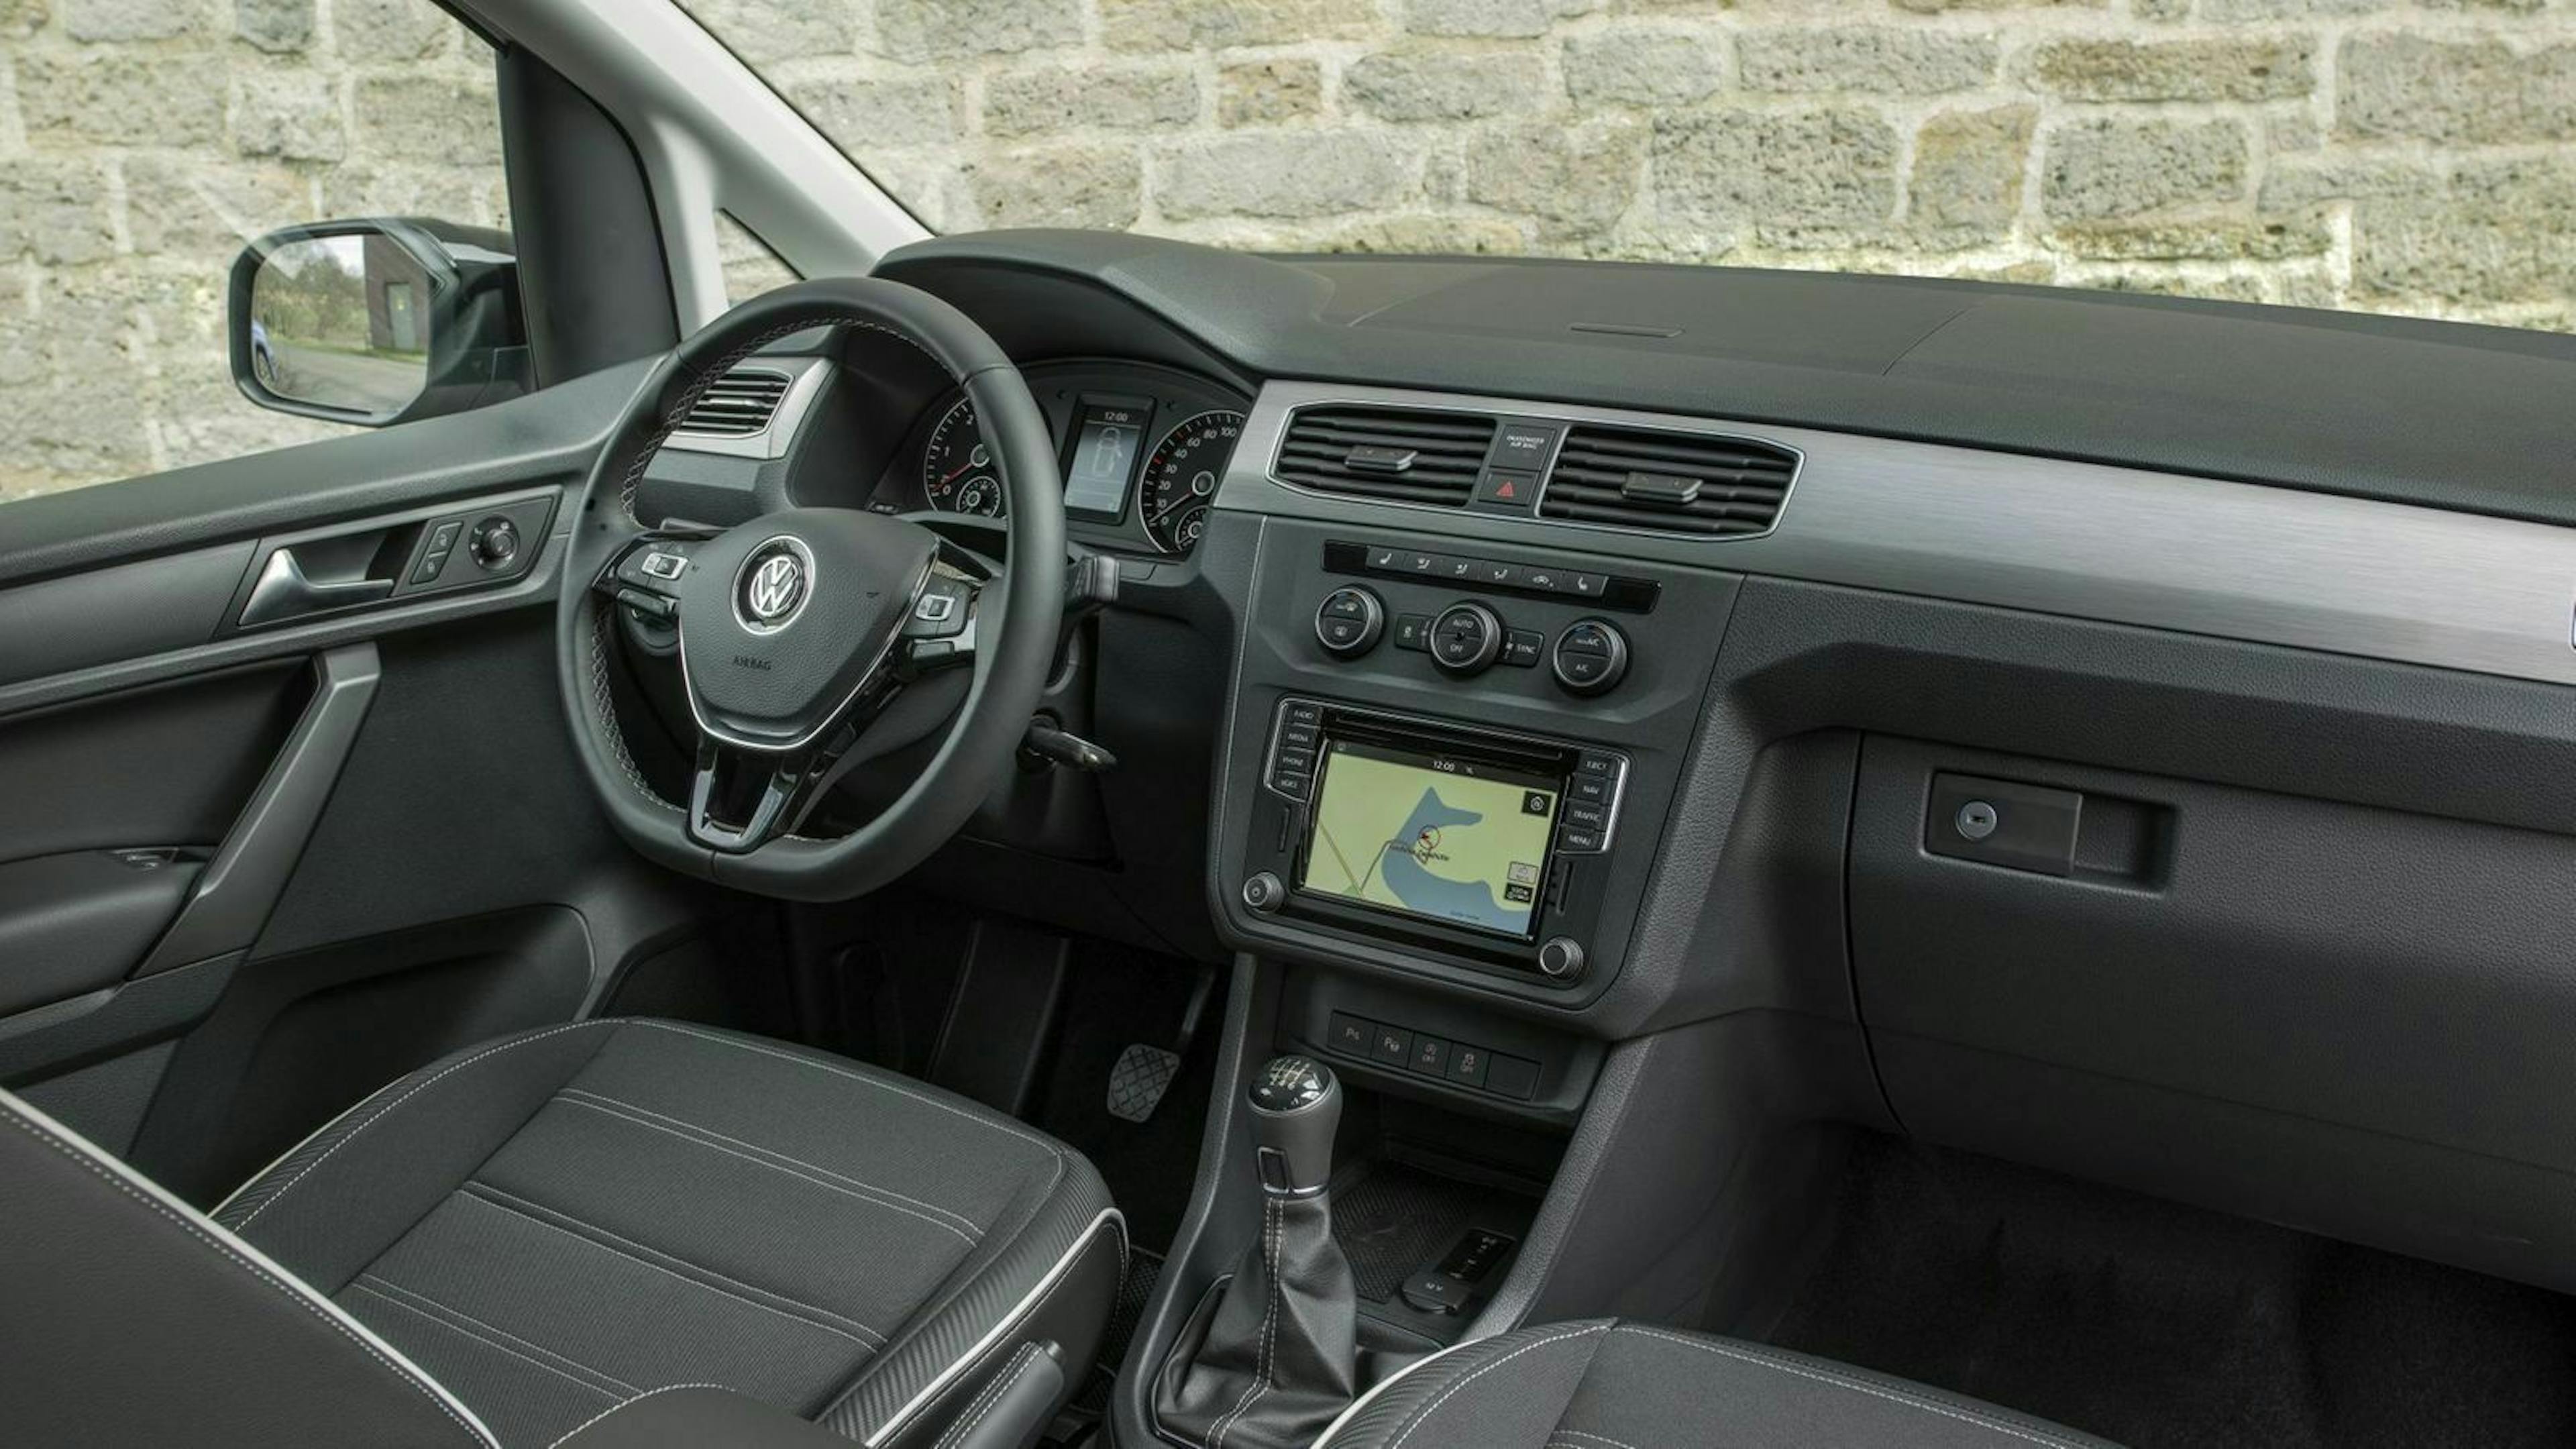 VW Caddy Cockpit